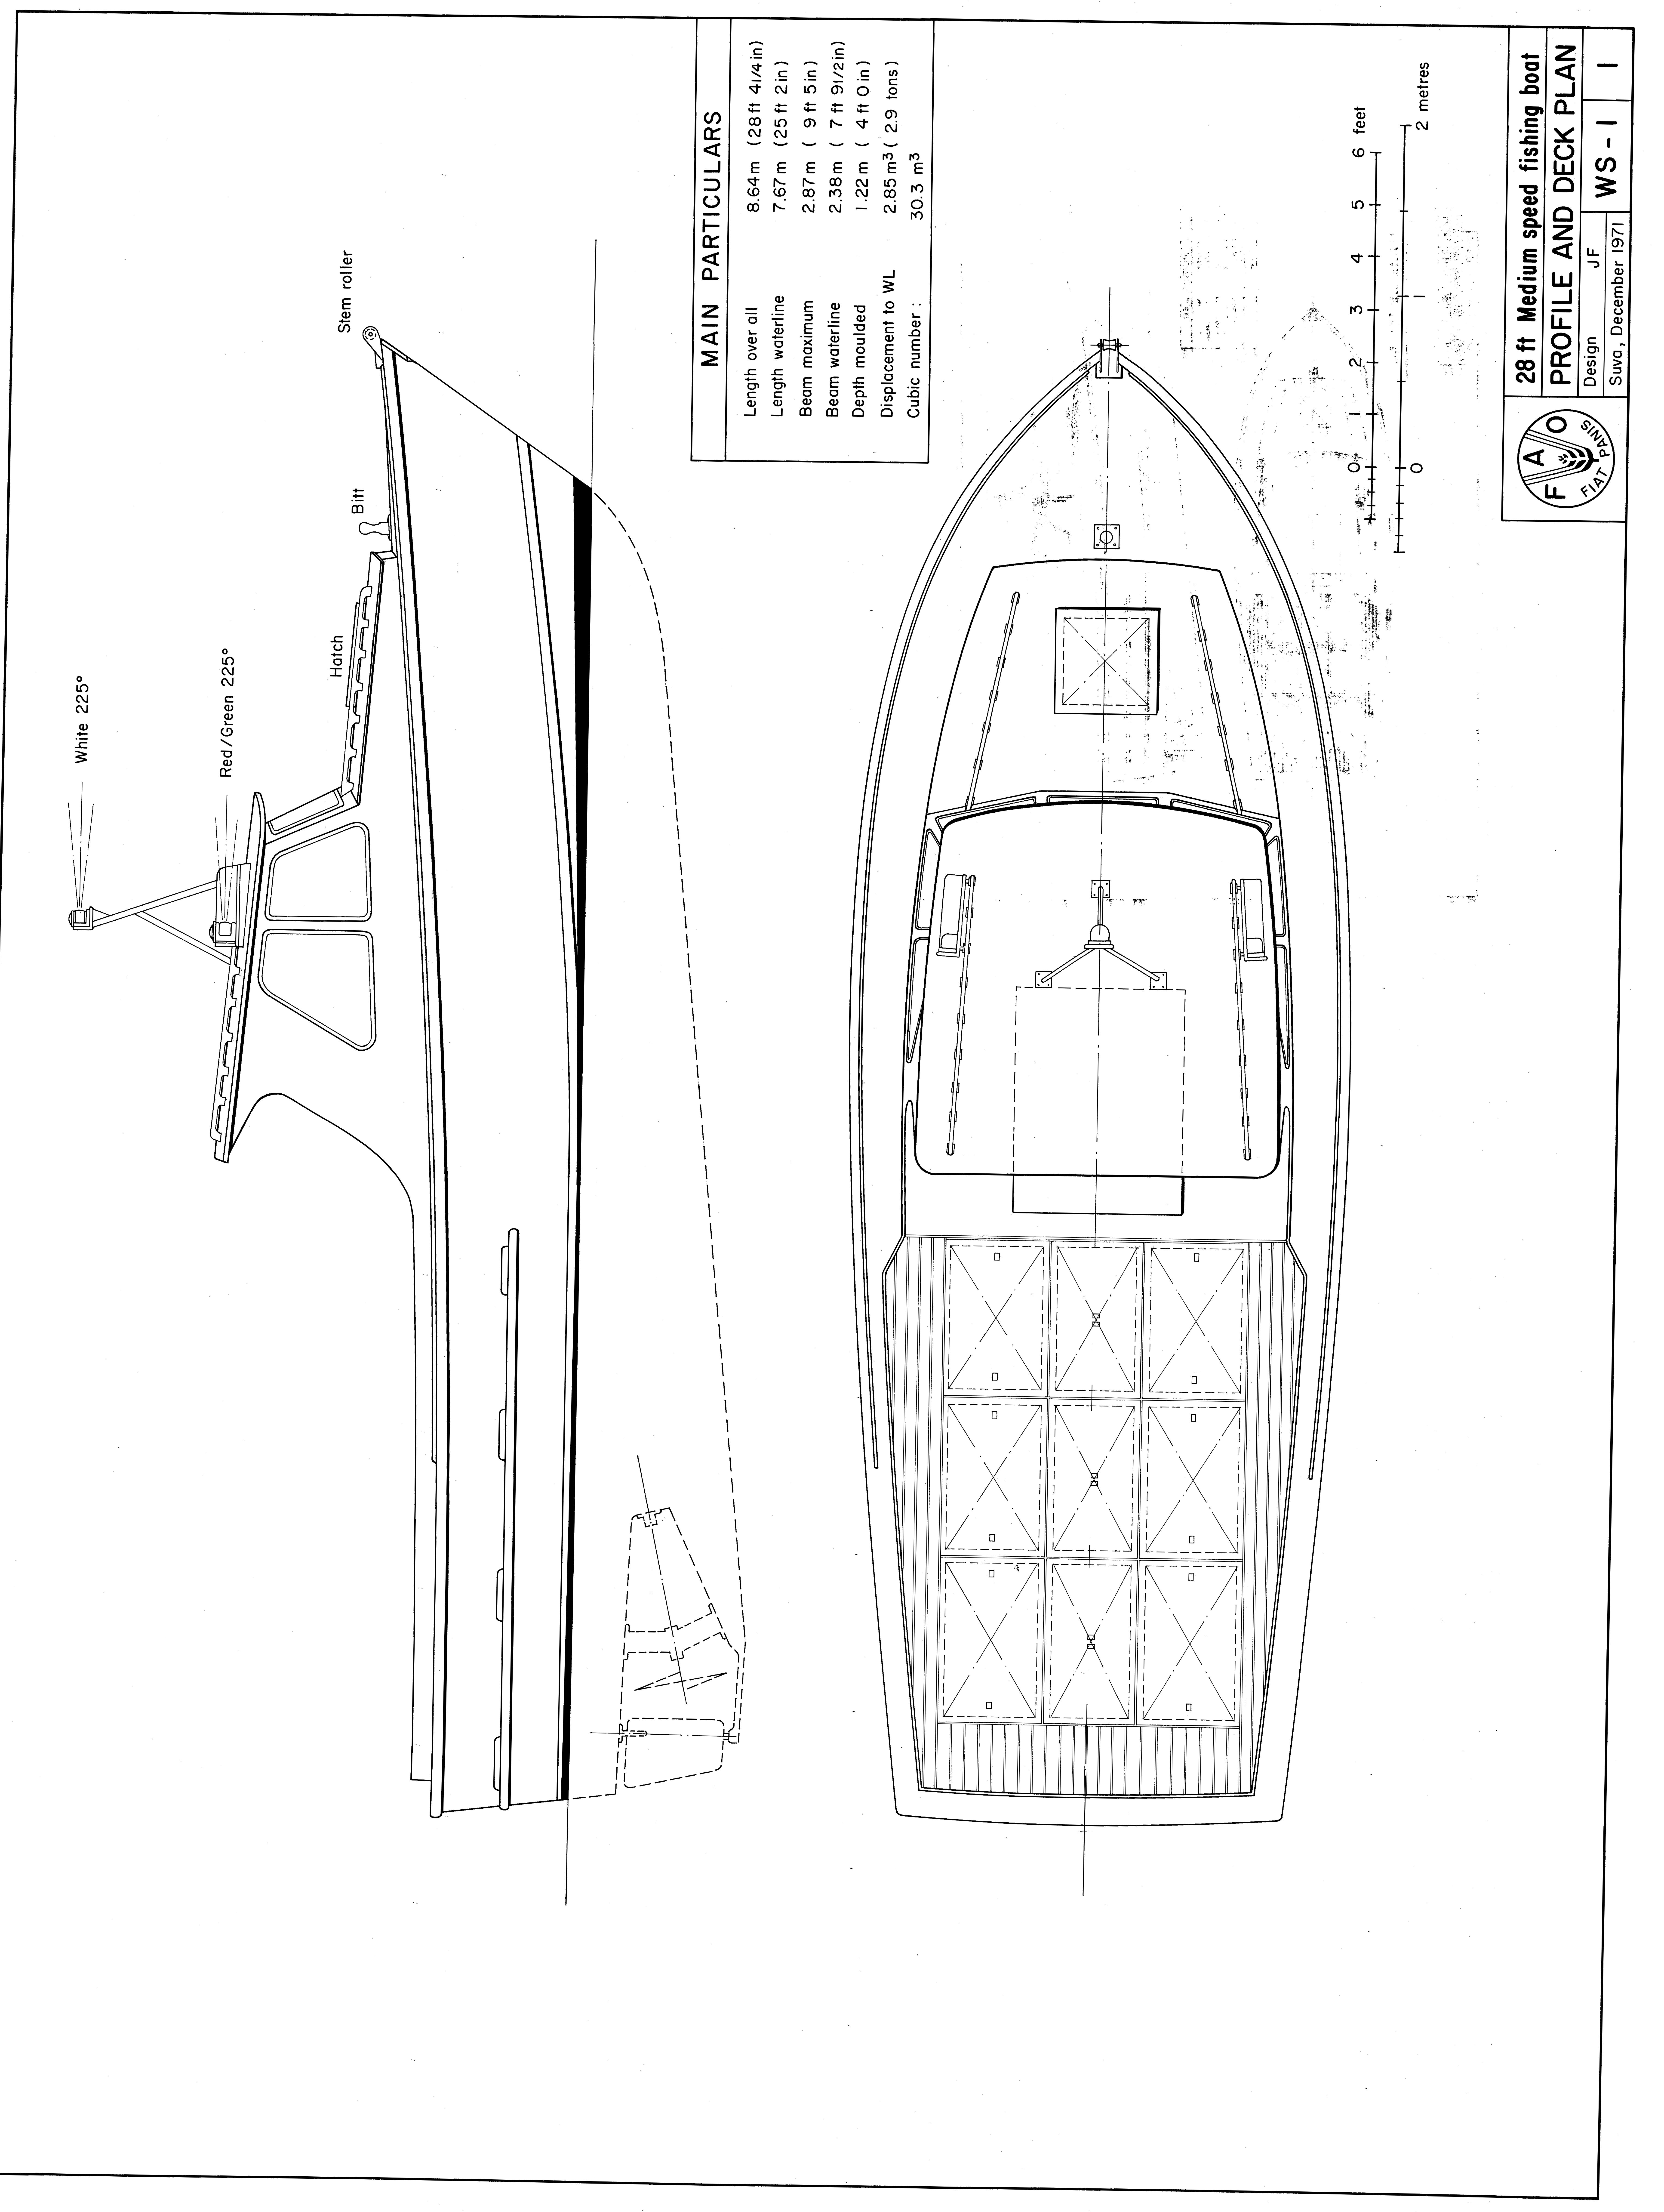 Medium Speed Fishing Boat - 28ft - Fishing Vessel Design Database